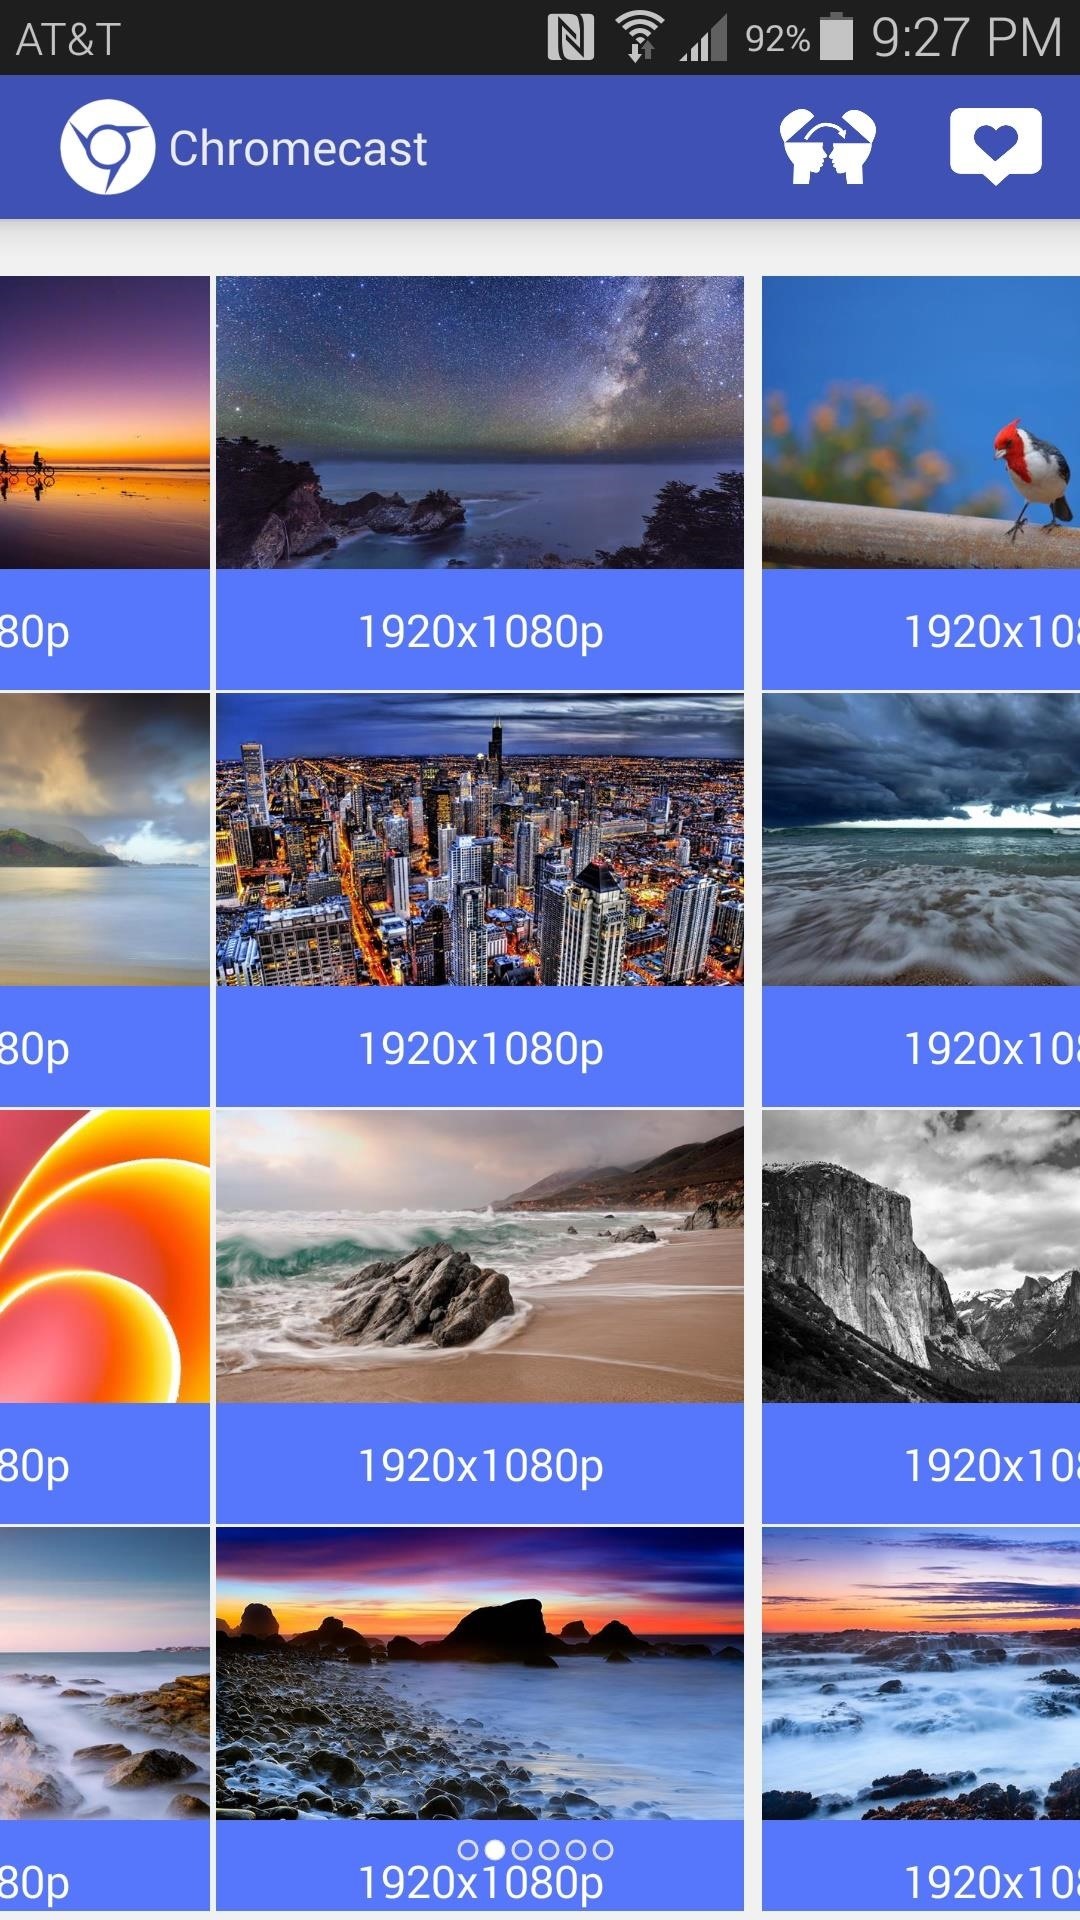 Set Chromecast Background Images as Your Wallpaper « Samsung :: Gadget